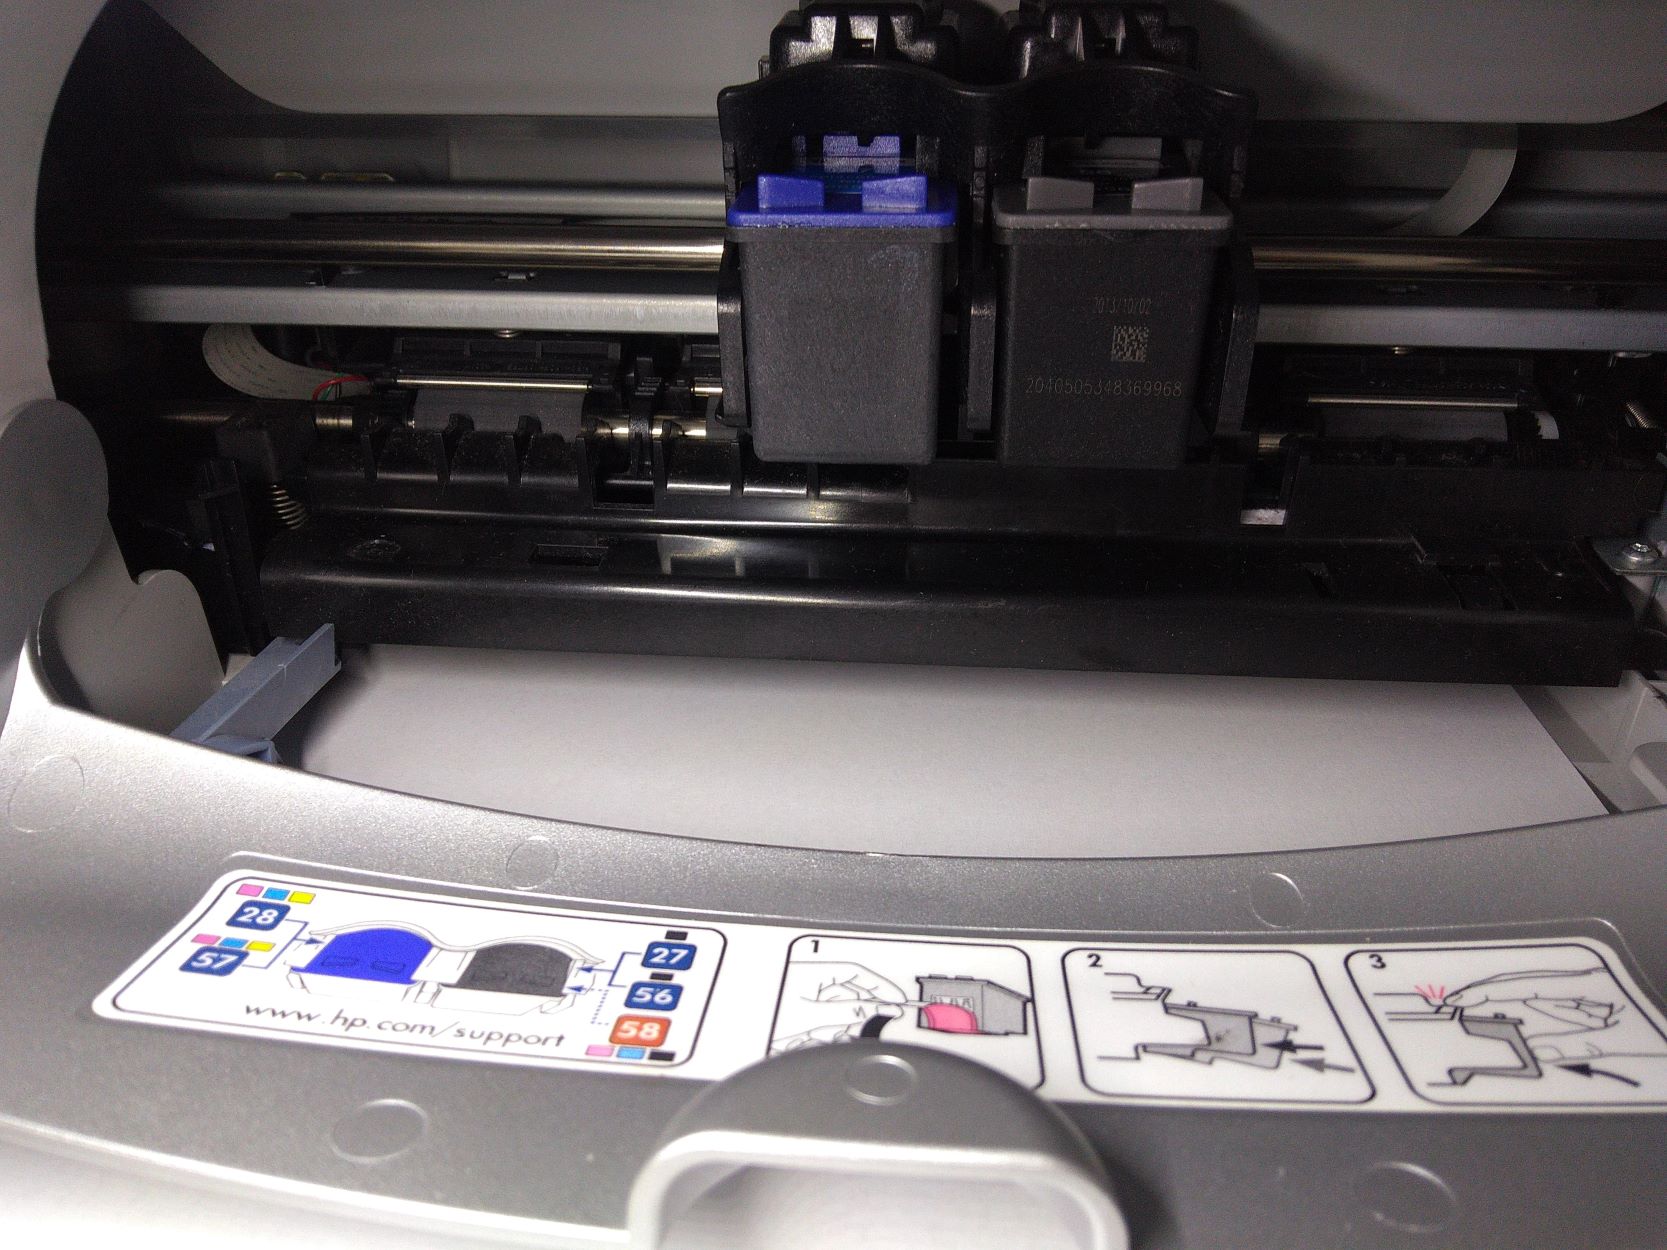 How To Bypass HP Printer Cartridge Error